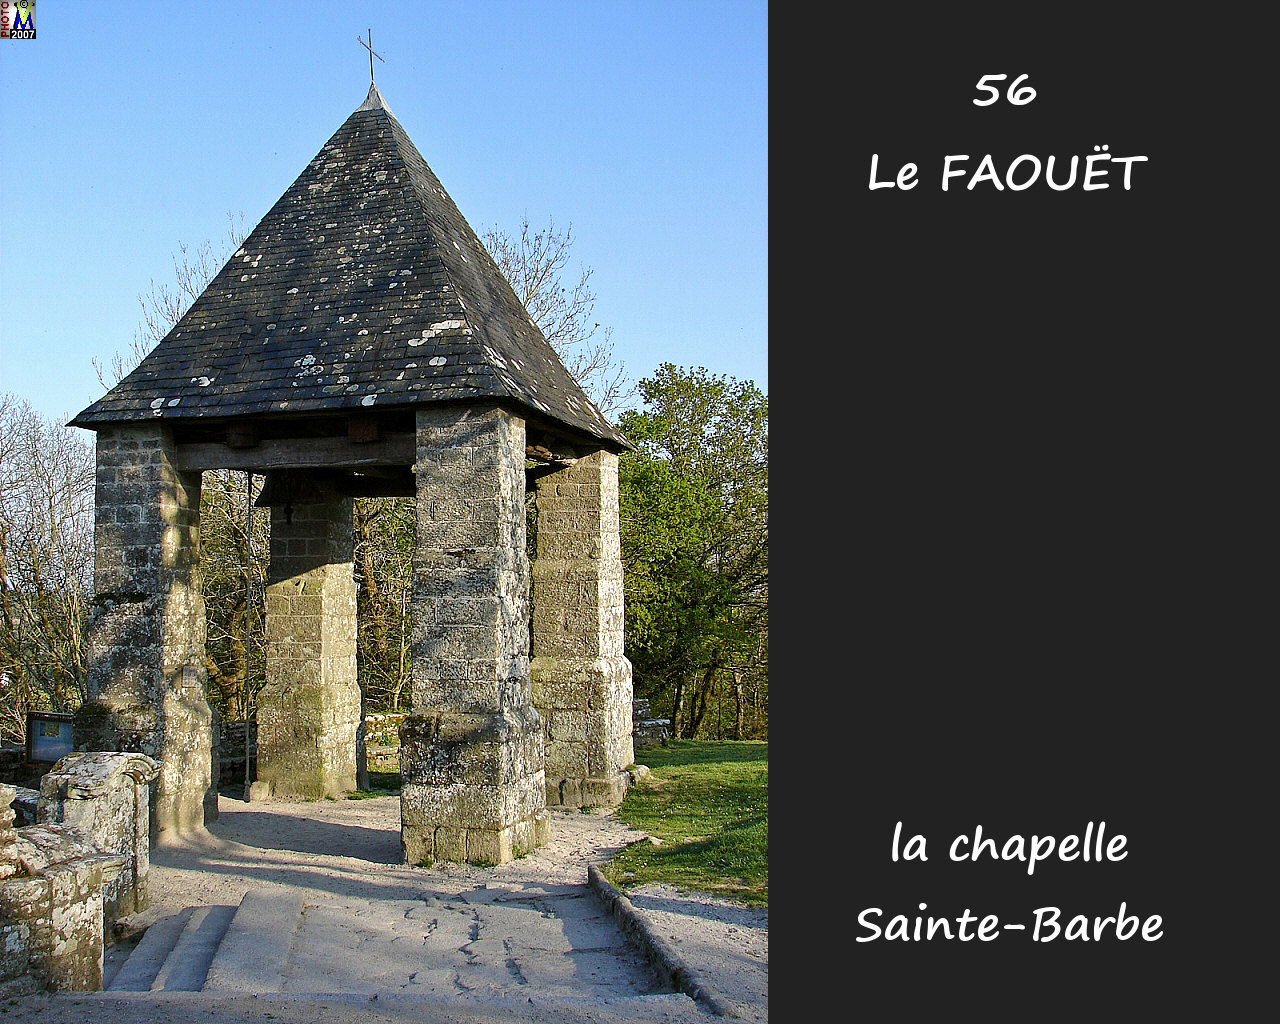 56FAOUET_chapelle-barbe_110.jpg